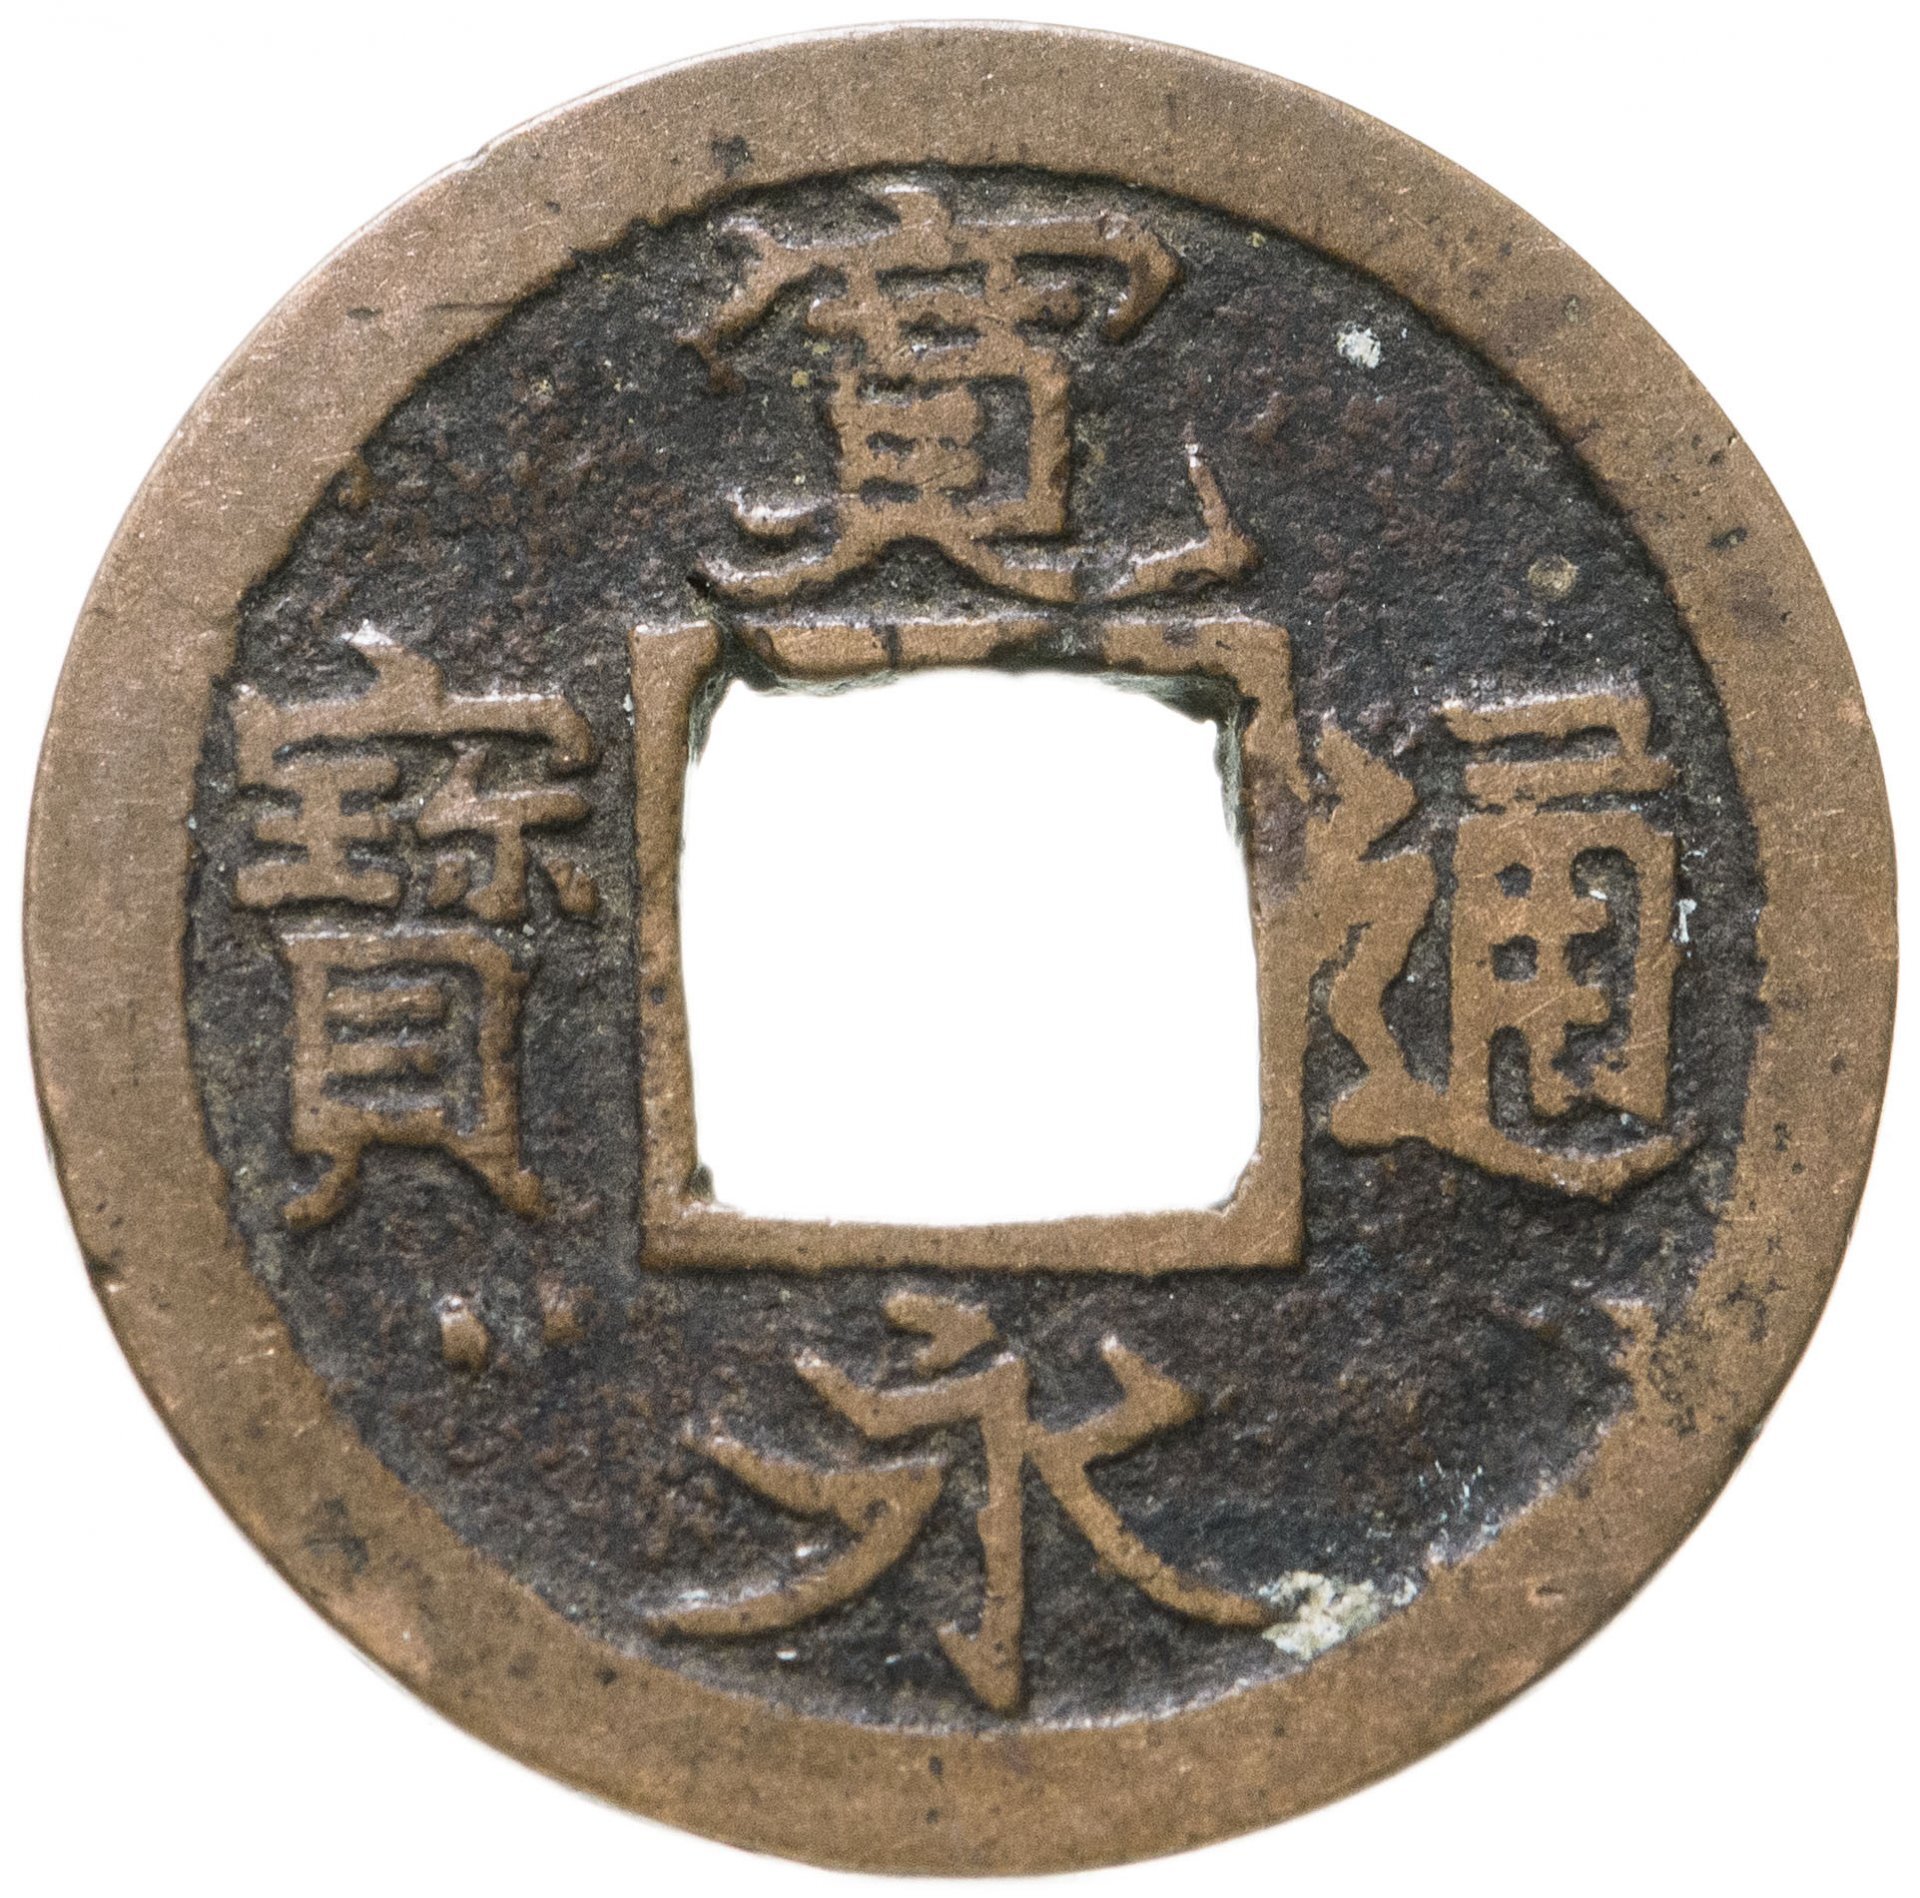 Японская монета 1